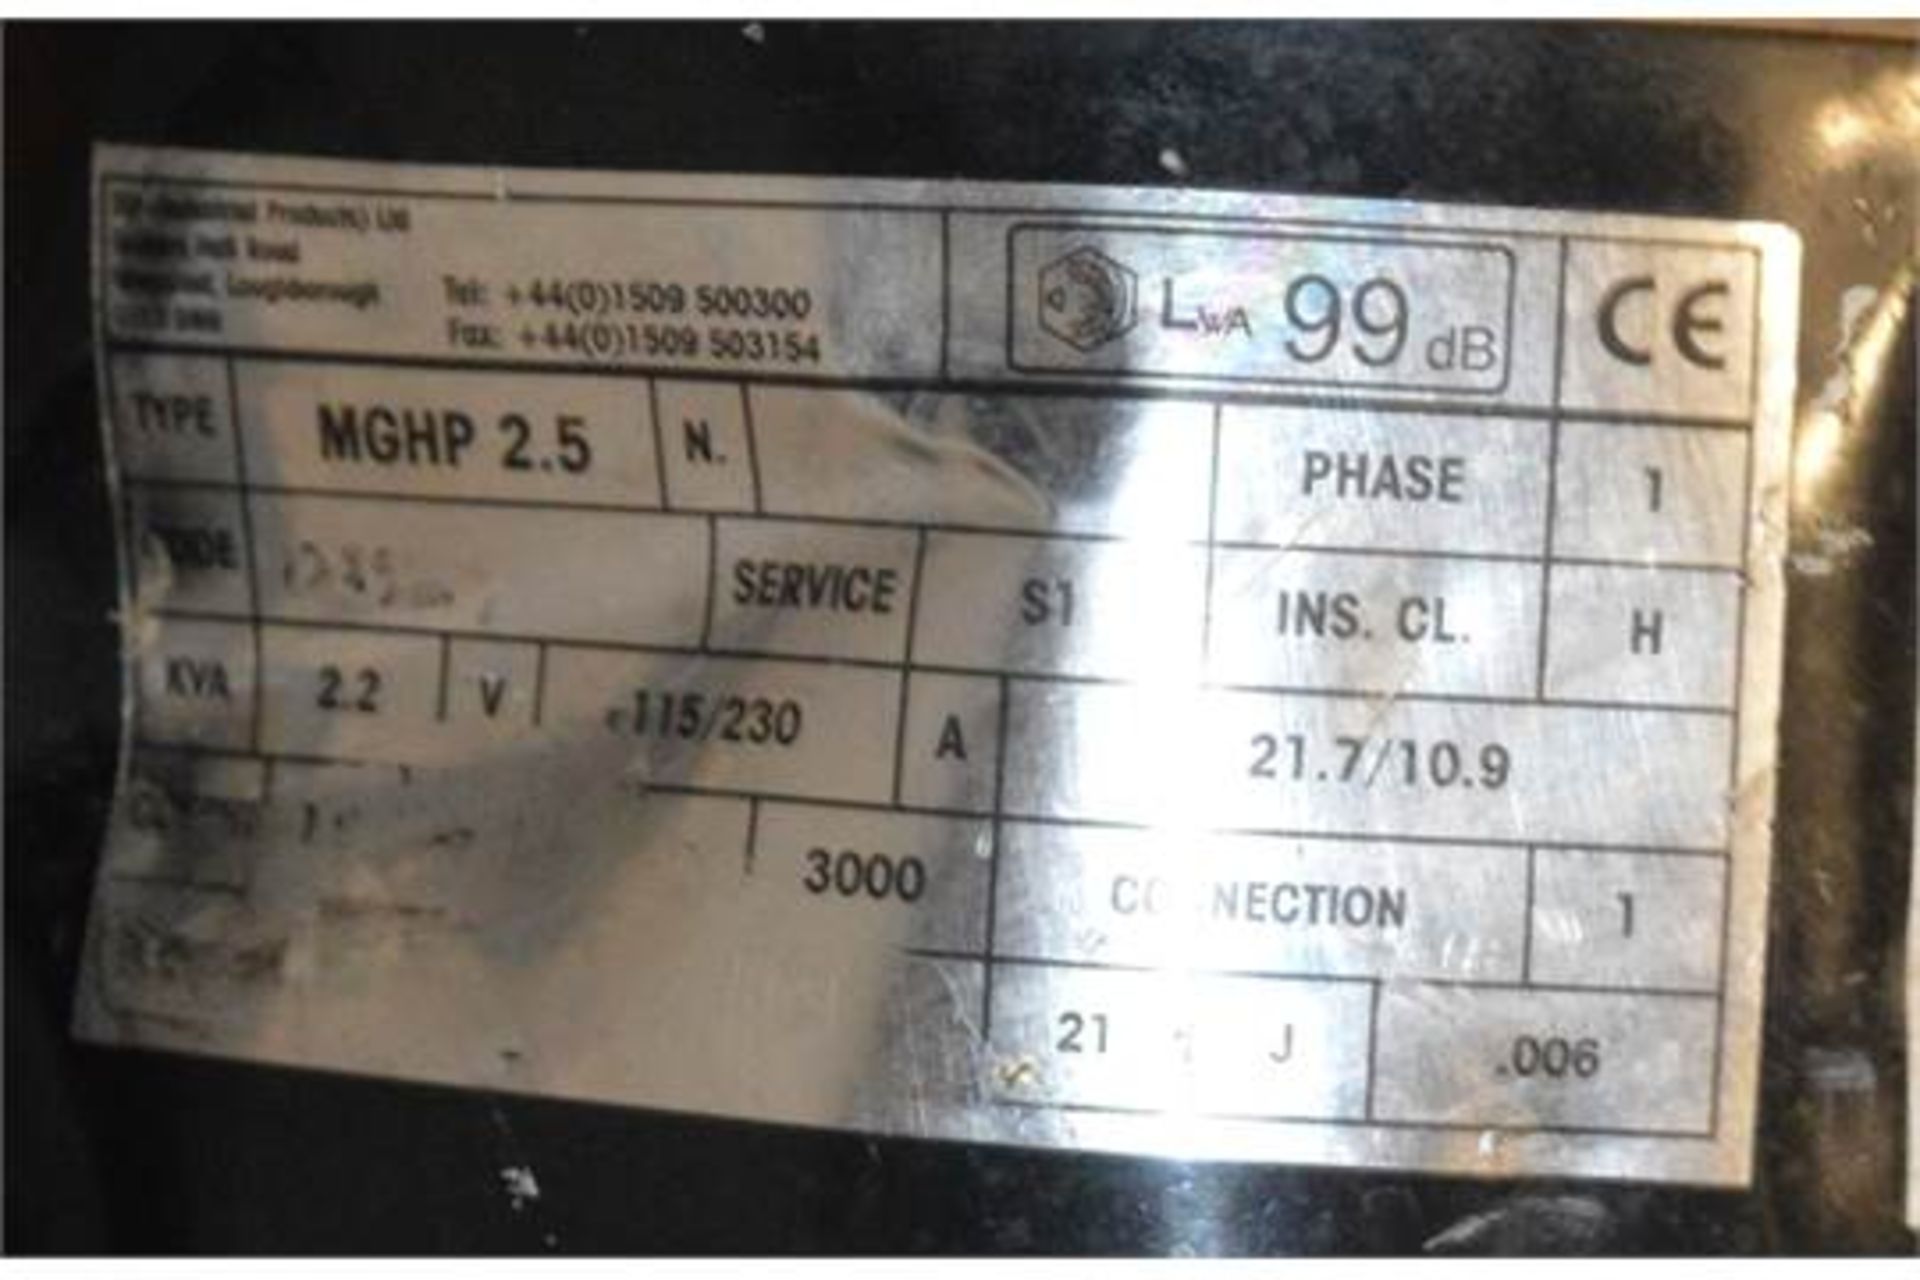 1 x Heavy Duty Portable Generator - ModelMGHP 2.5 - S335 - Location: Altrincham WA14 - Image 2 of 2